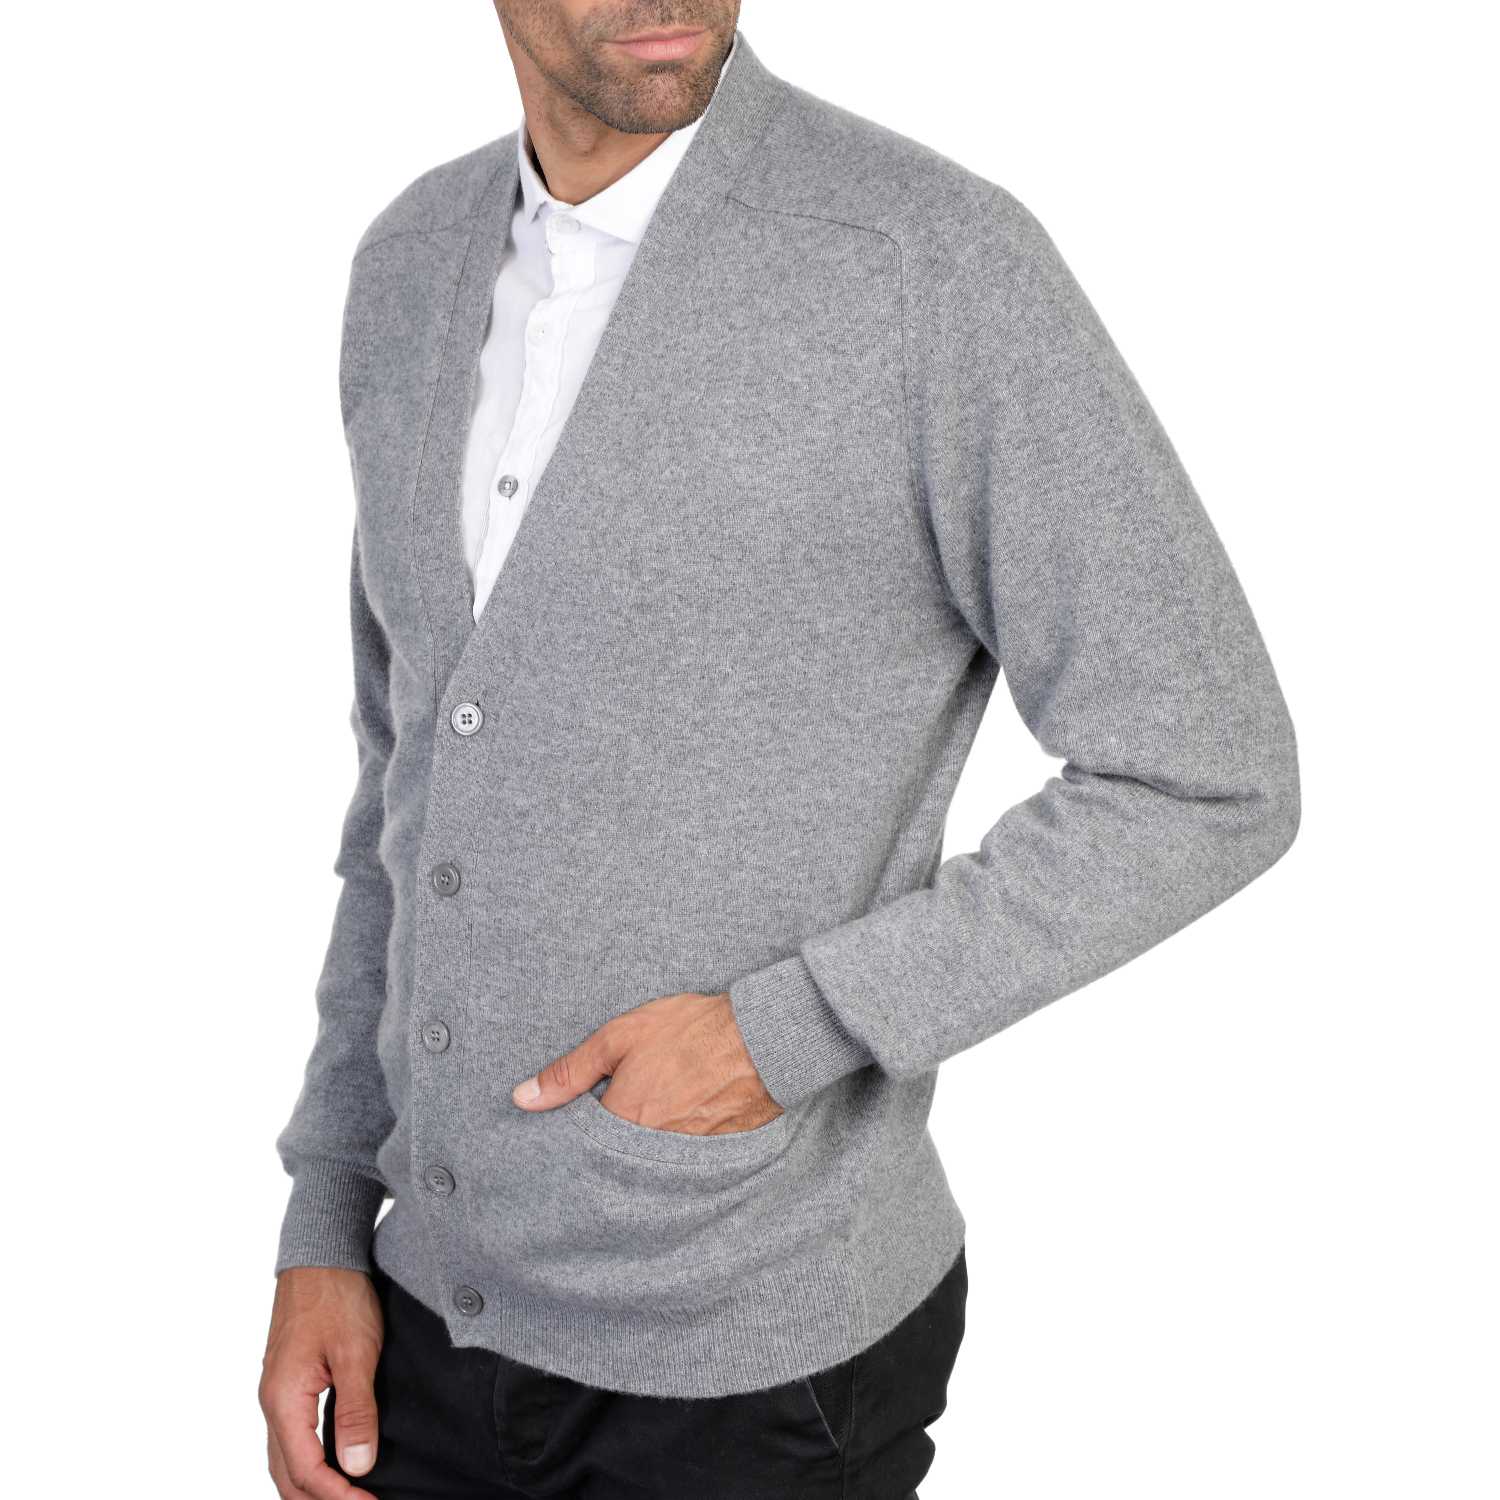 Shop for Mens Pure Cashmere Cardigans - The Cashmere Choice